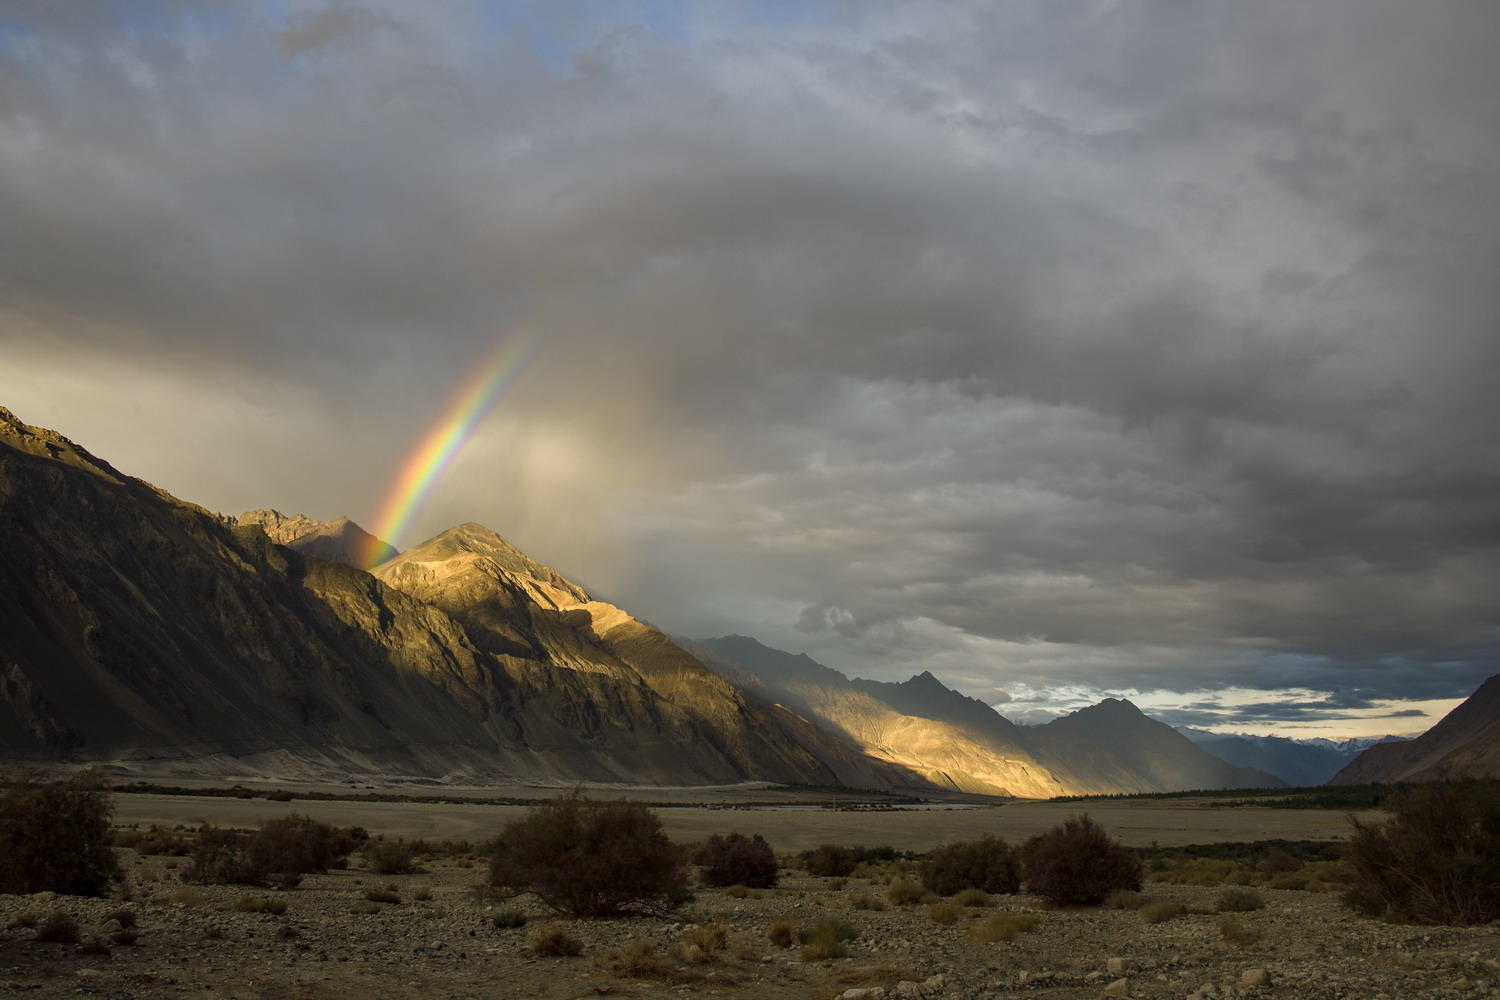 DSC_8190_1A2 - Rainbow Over the Nubra Valley